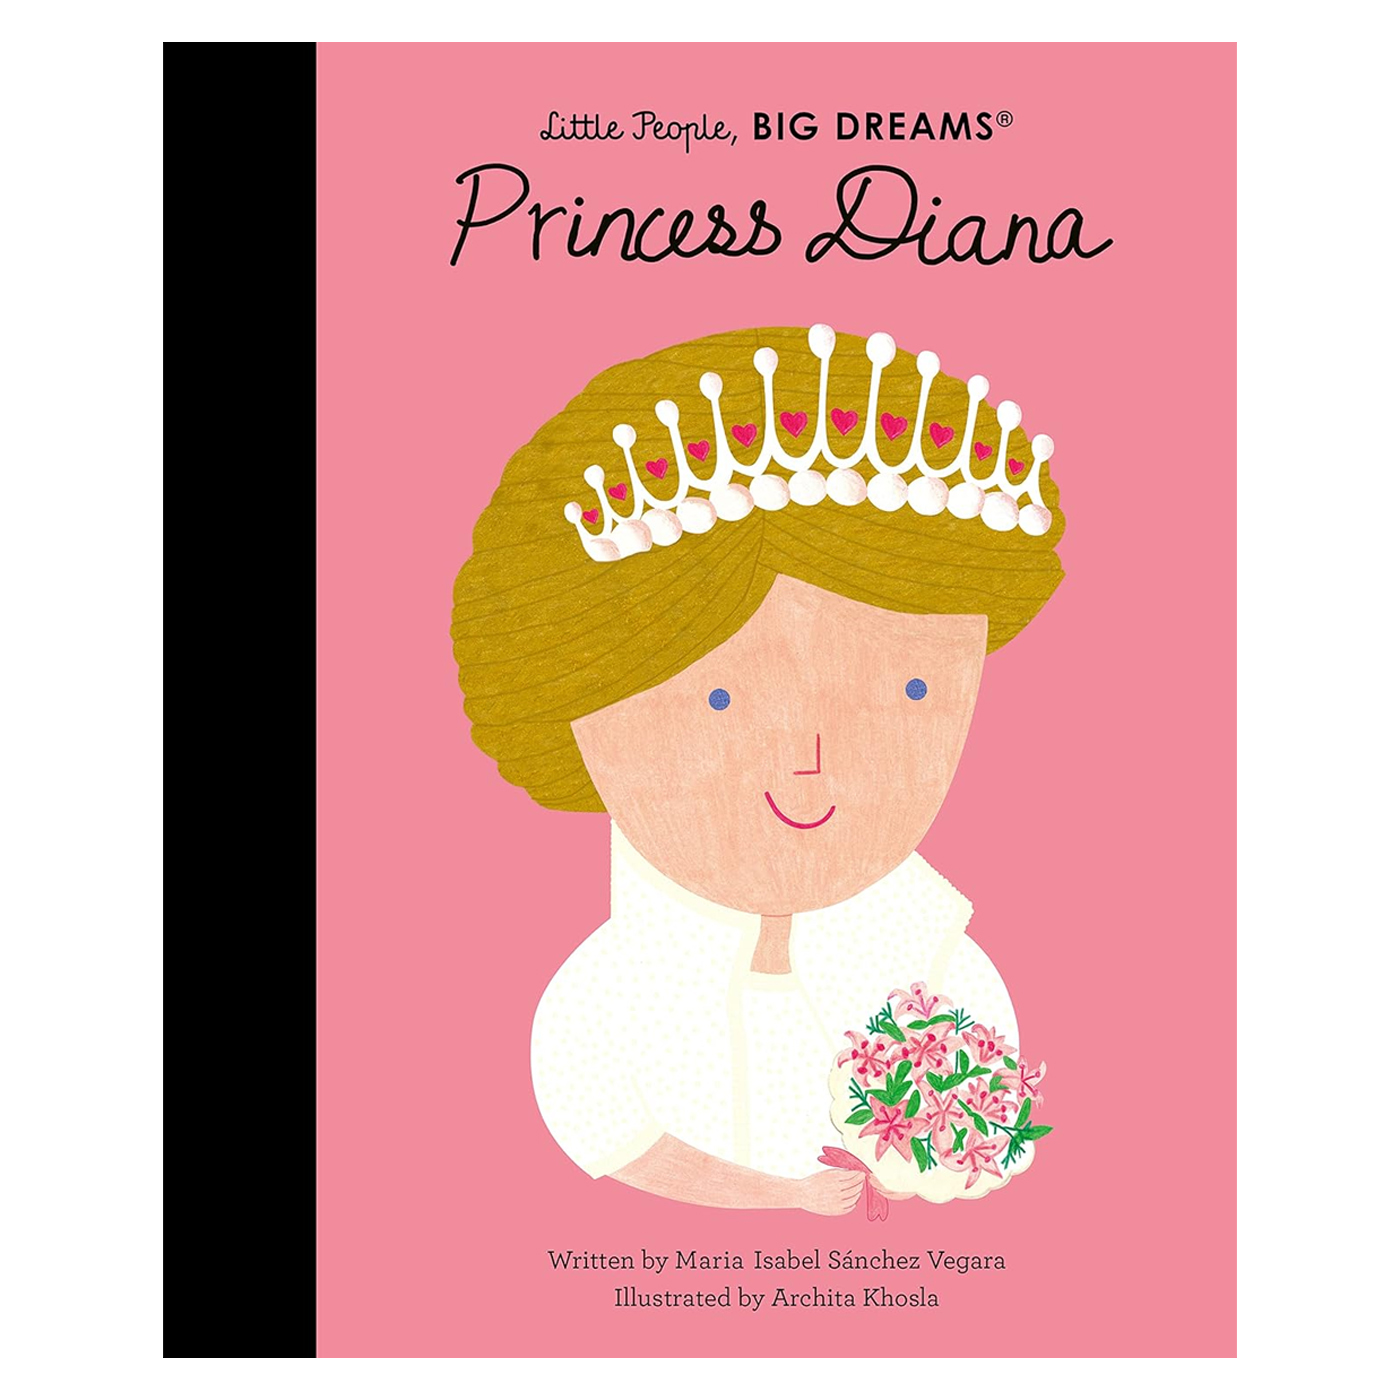  Little People Big Dreams: Princess Diana